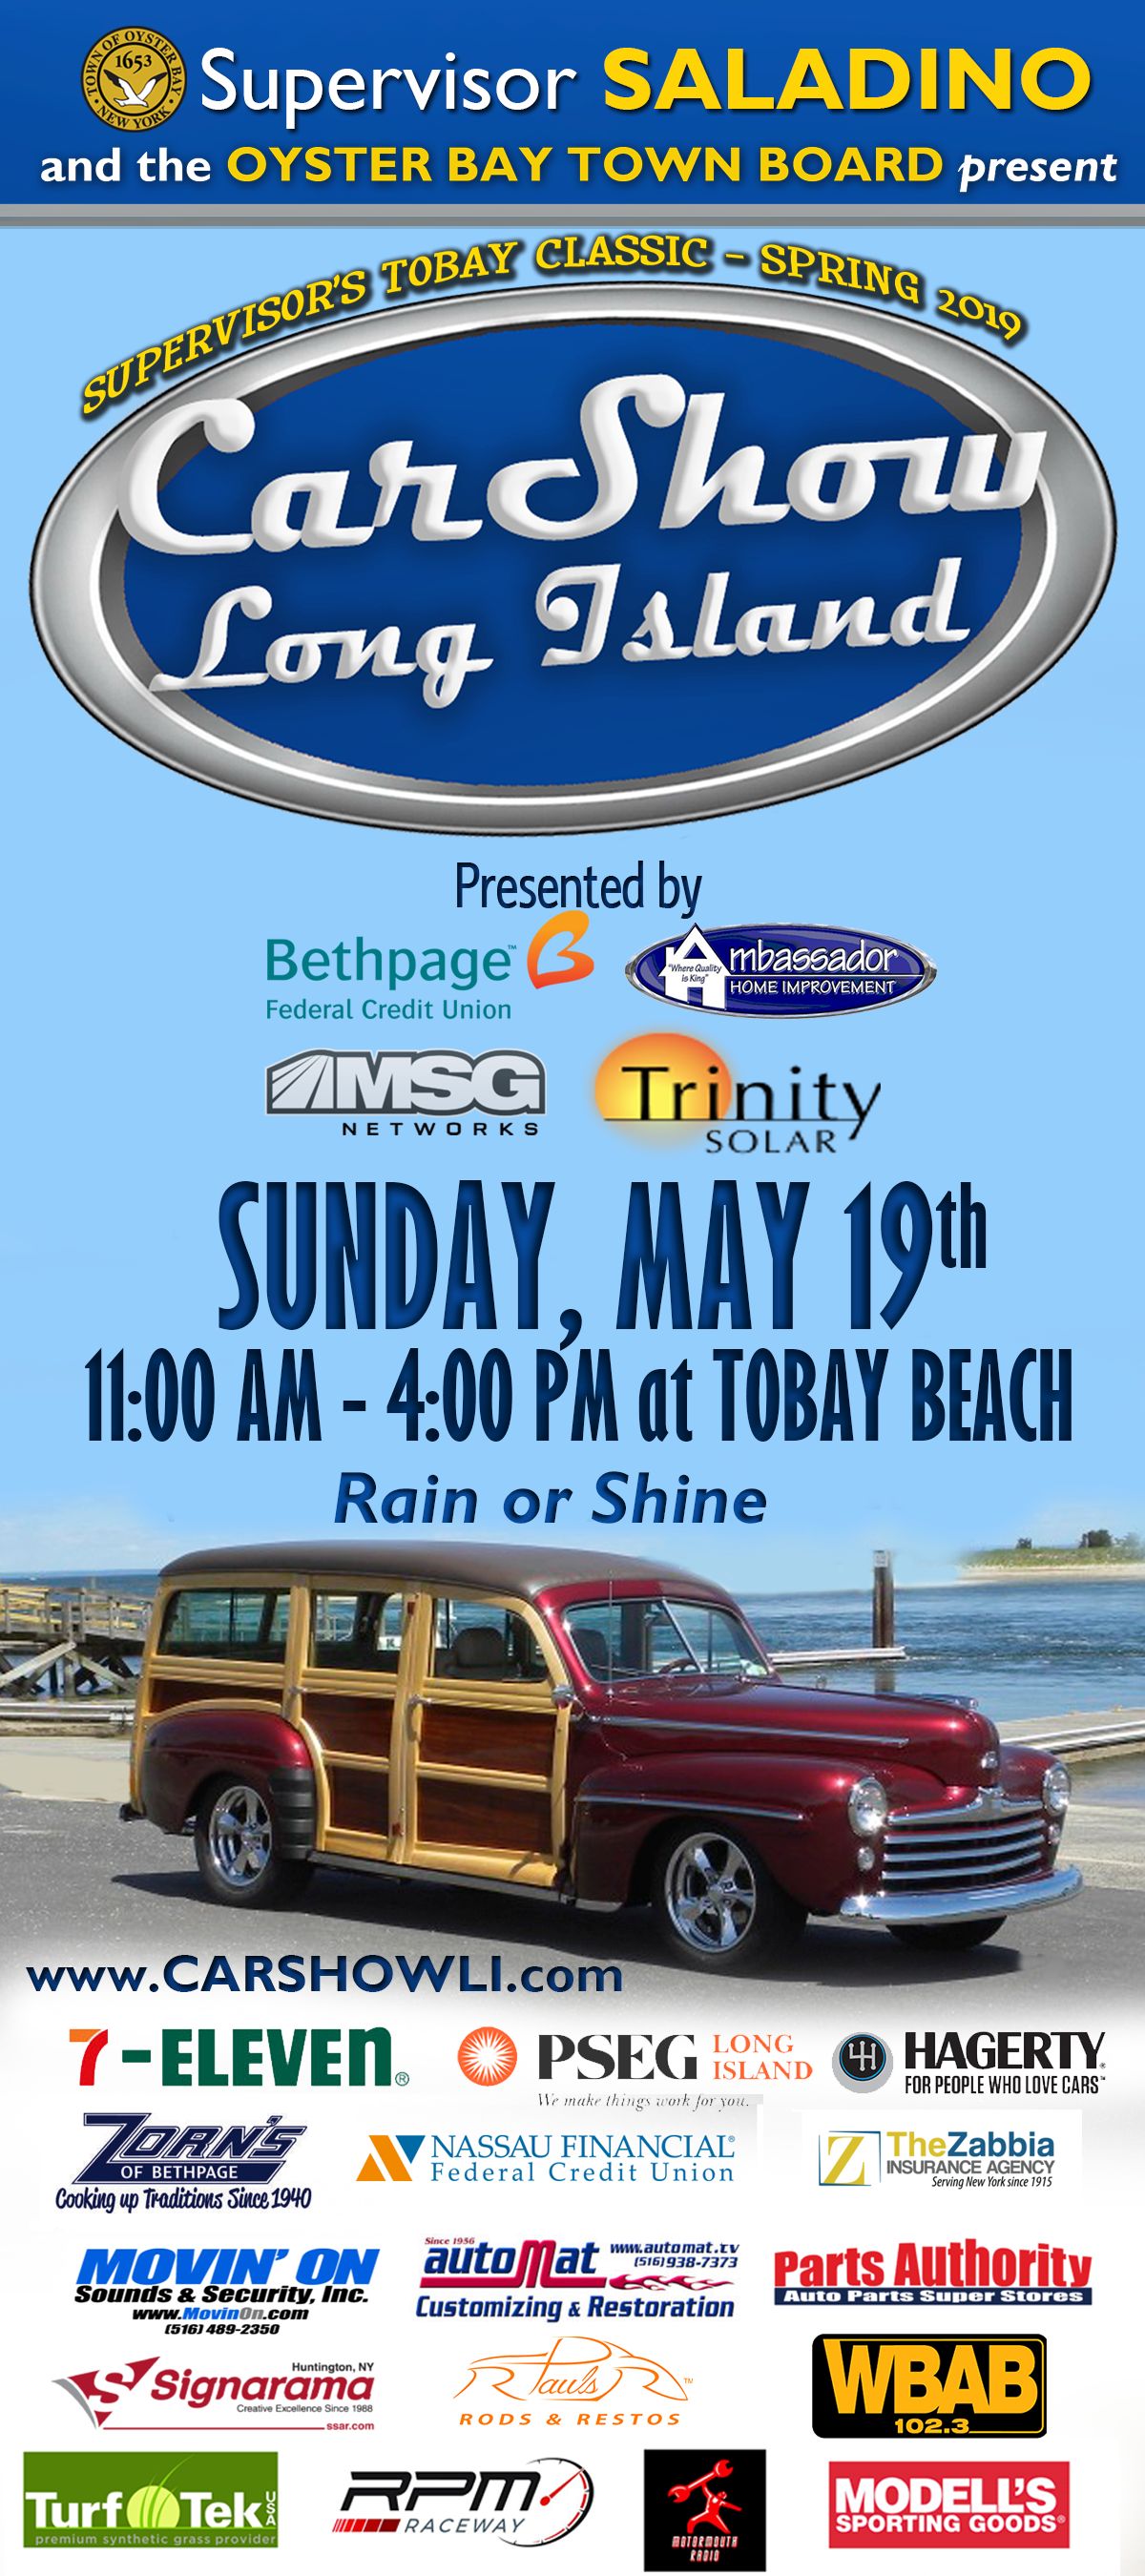 Car Show Long Island Tobay Beach, Sunday, April 28th, 2019